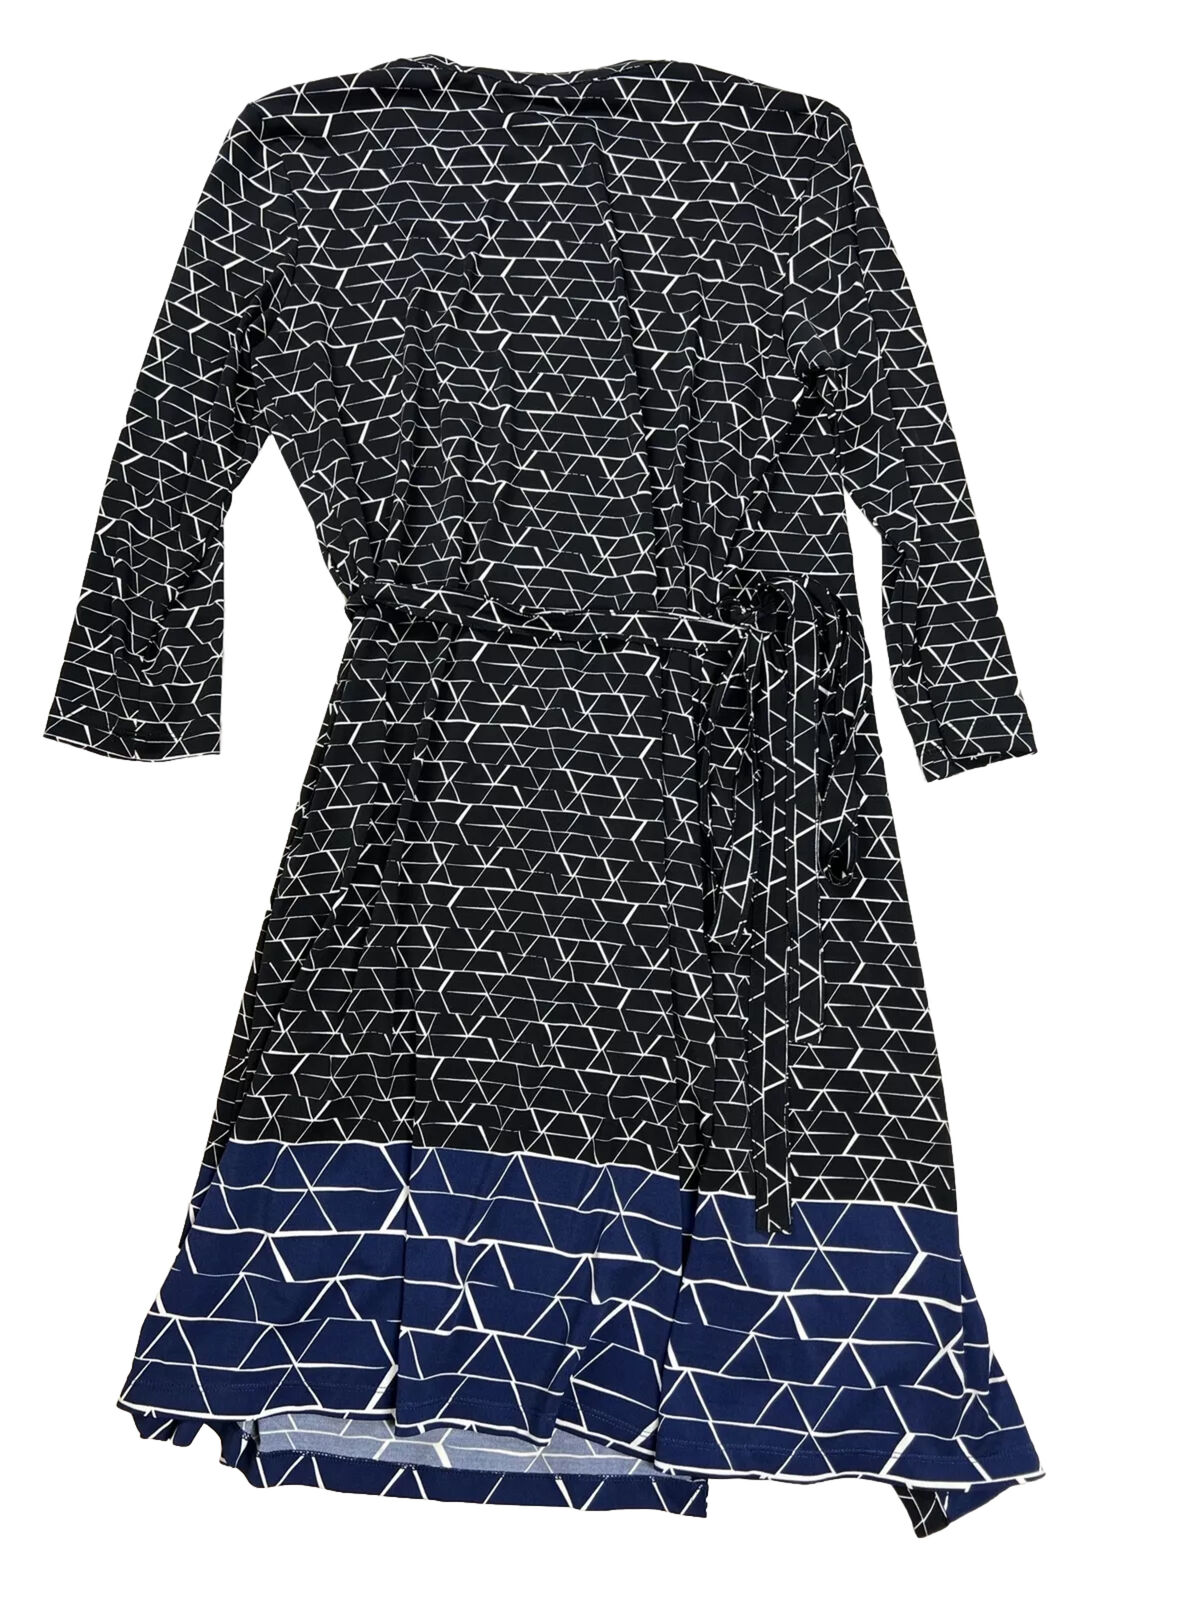 NEW Max Studio Women's Black Geometric Wrap Dress - M